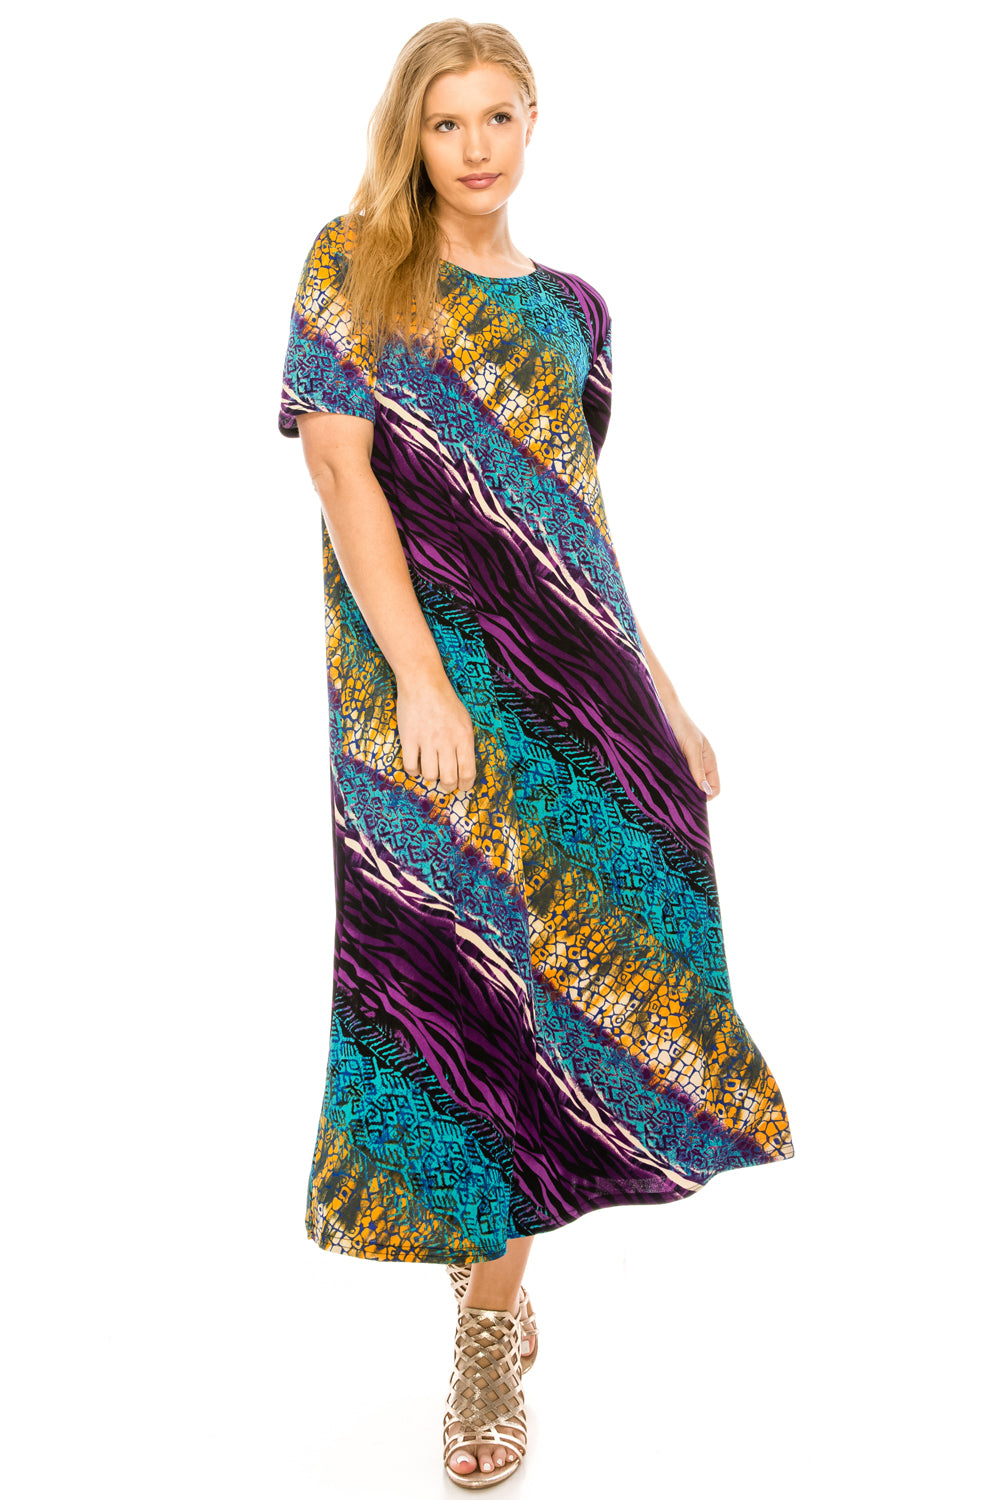 Jostar Women's Stretchy Long Dress Short Sleeve Print, 702BN-SP-W182 - Jostar Online